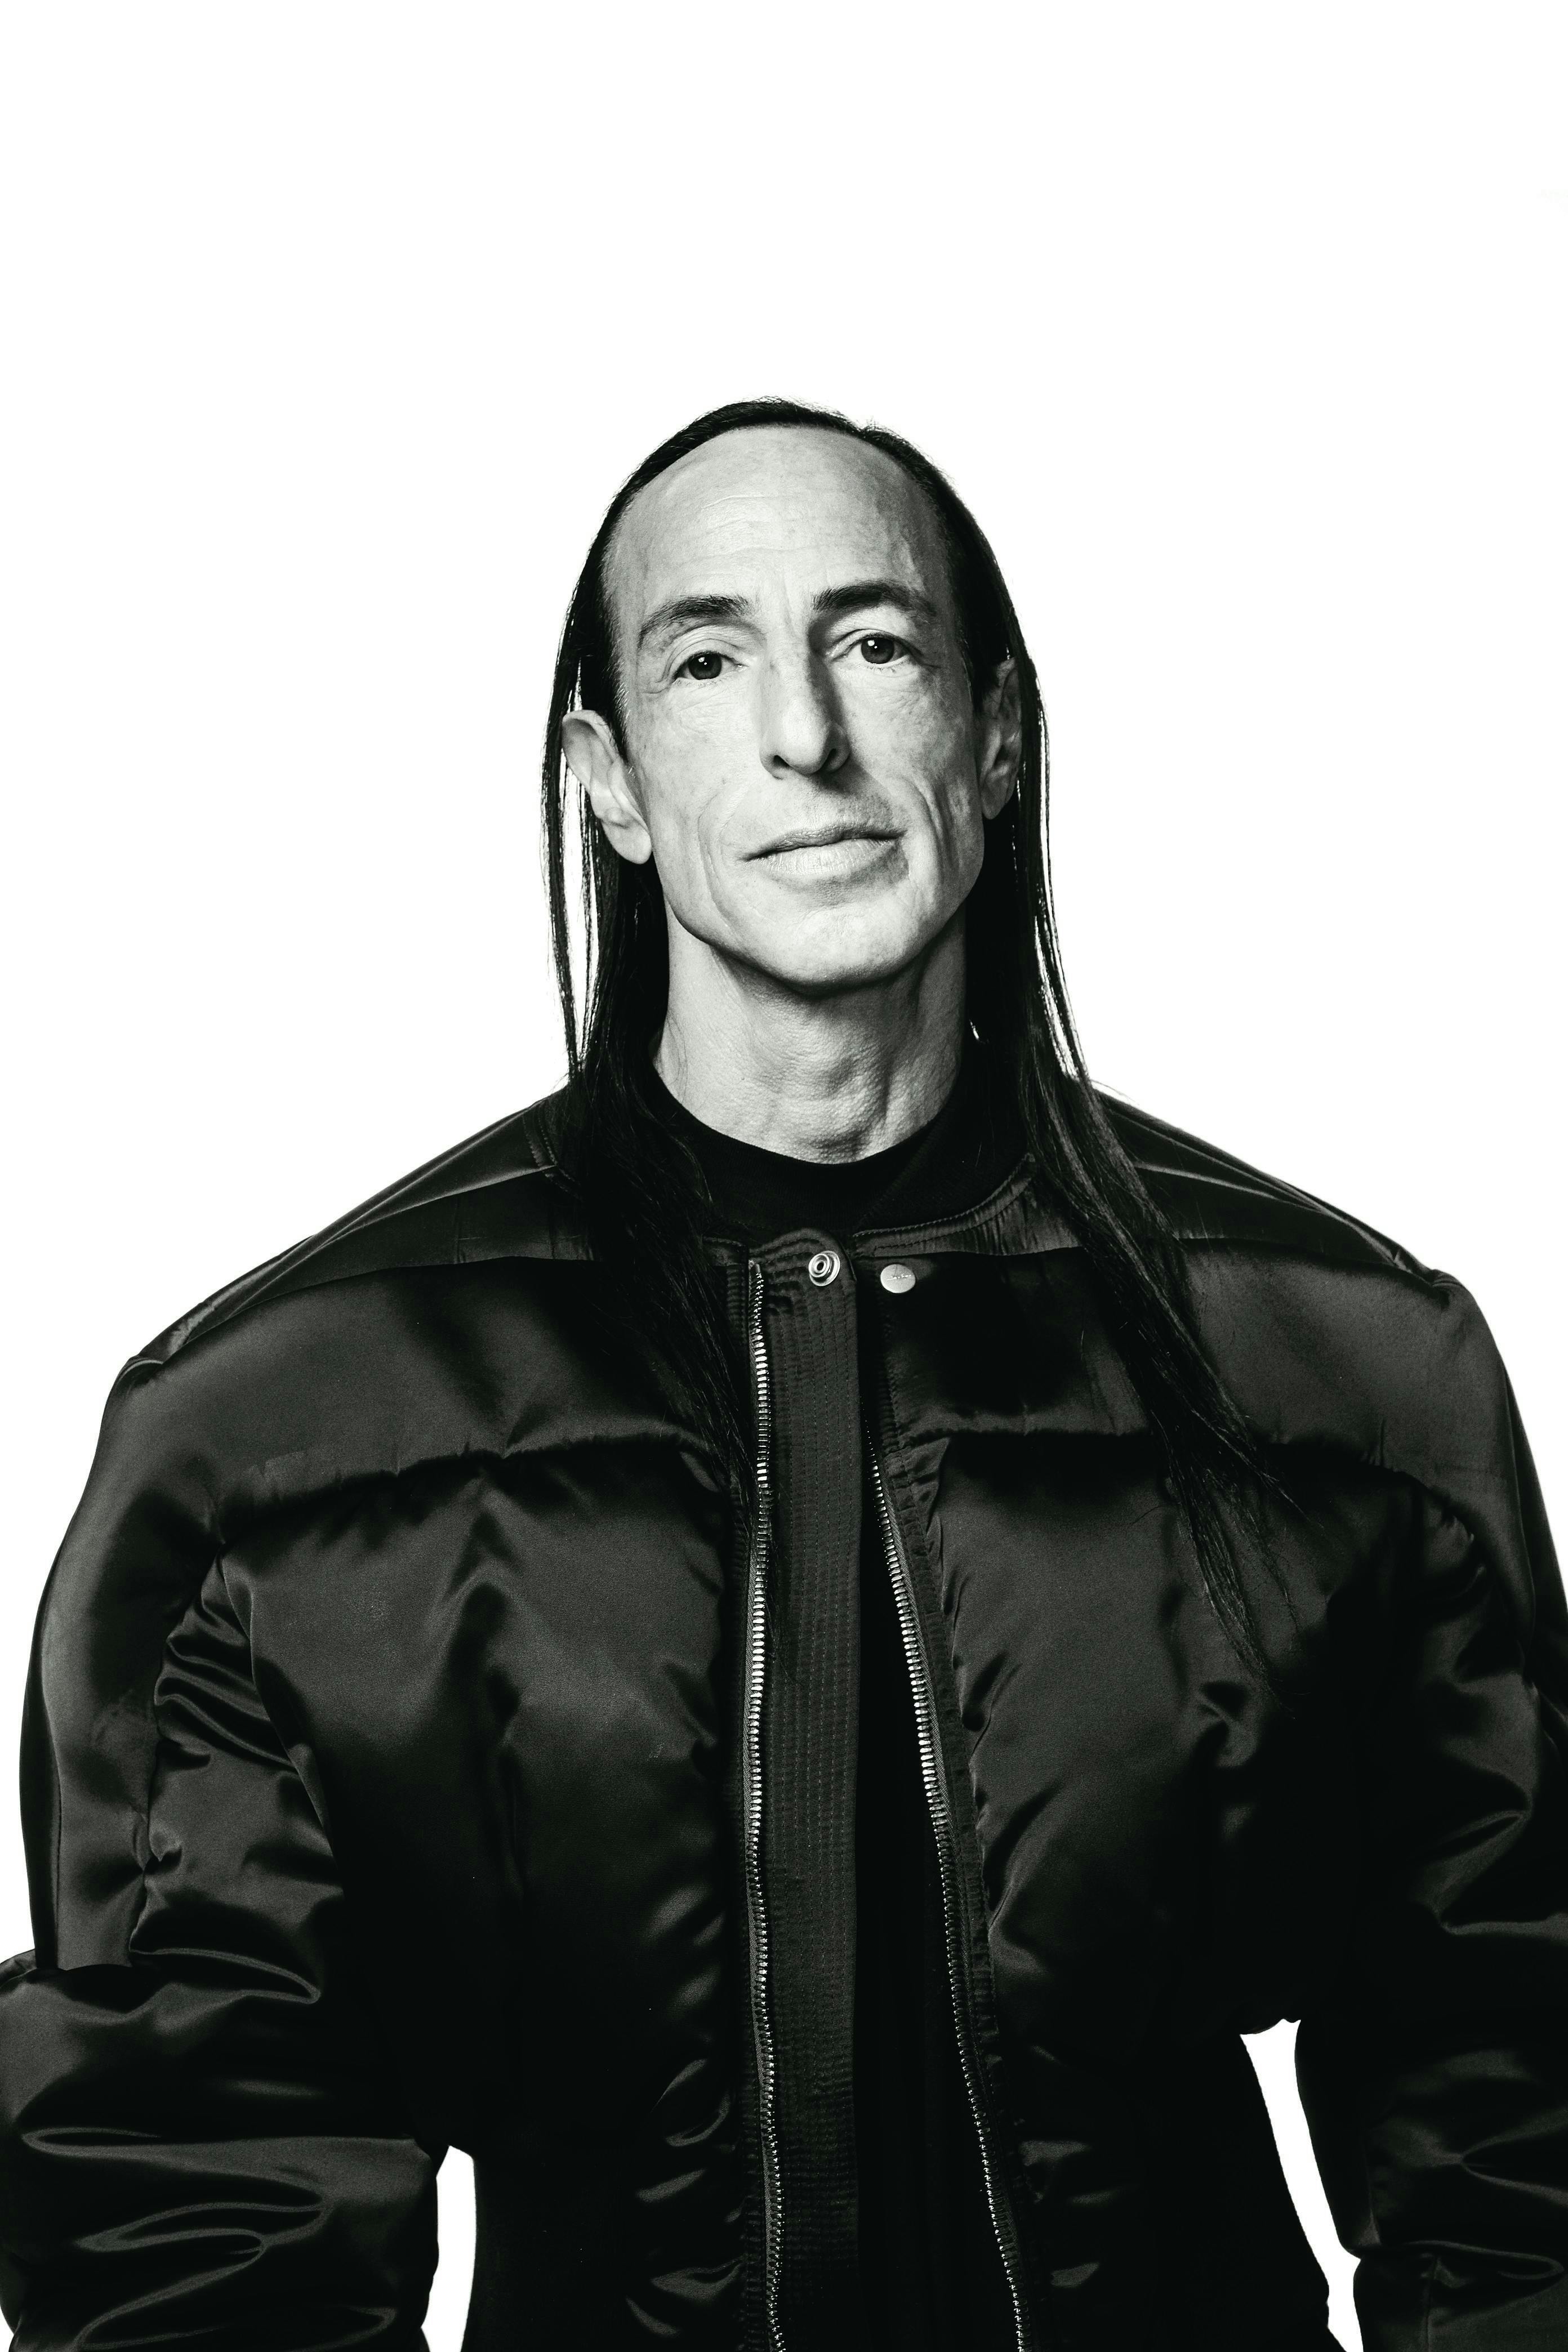 clothing coat jacket face person photography portrait adult male man